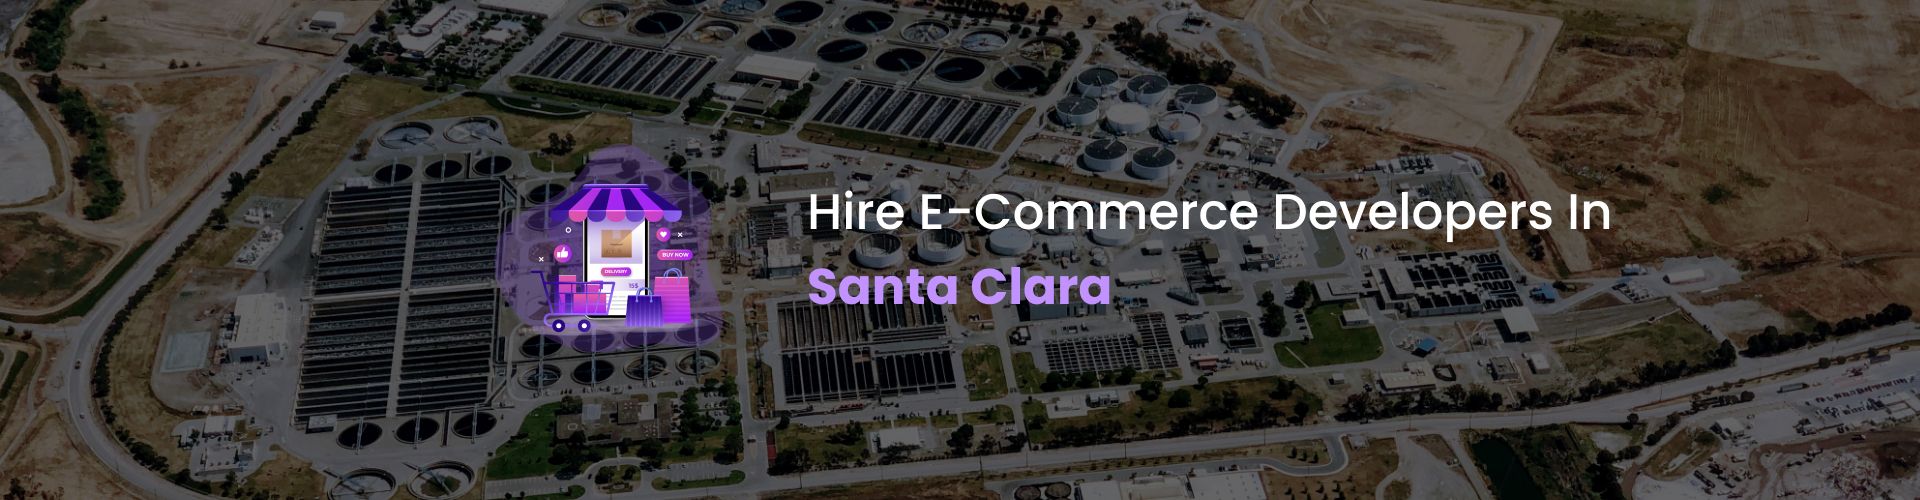 ecommerce development company in santa clara